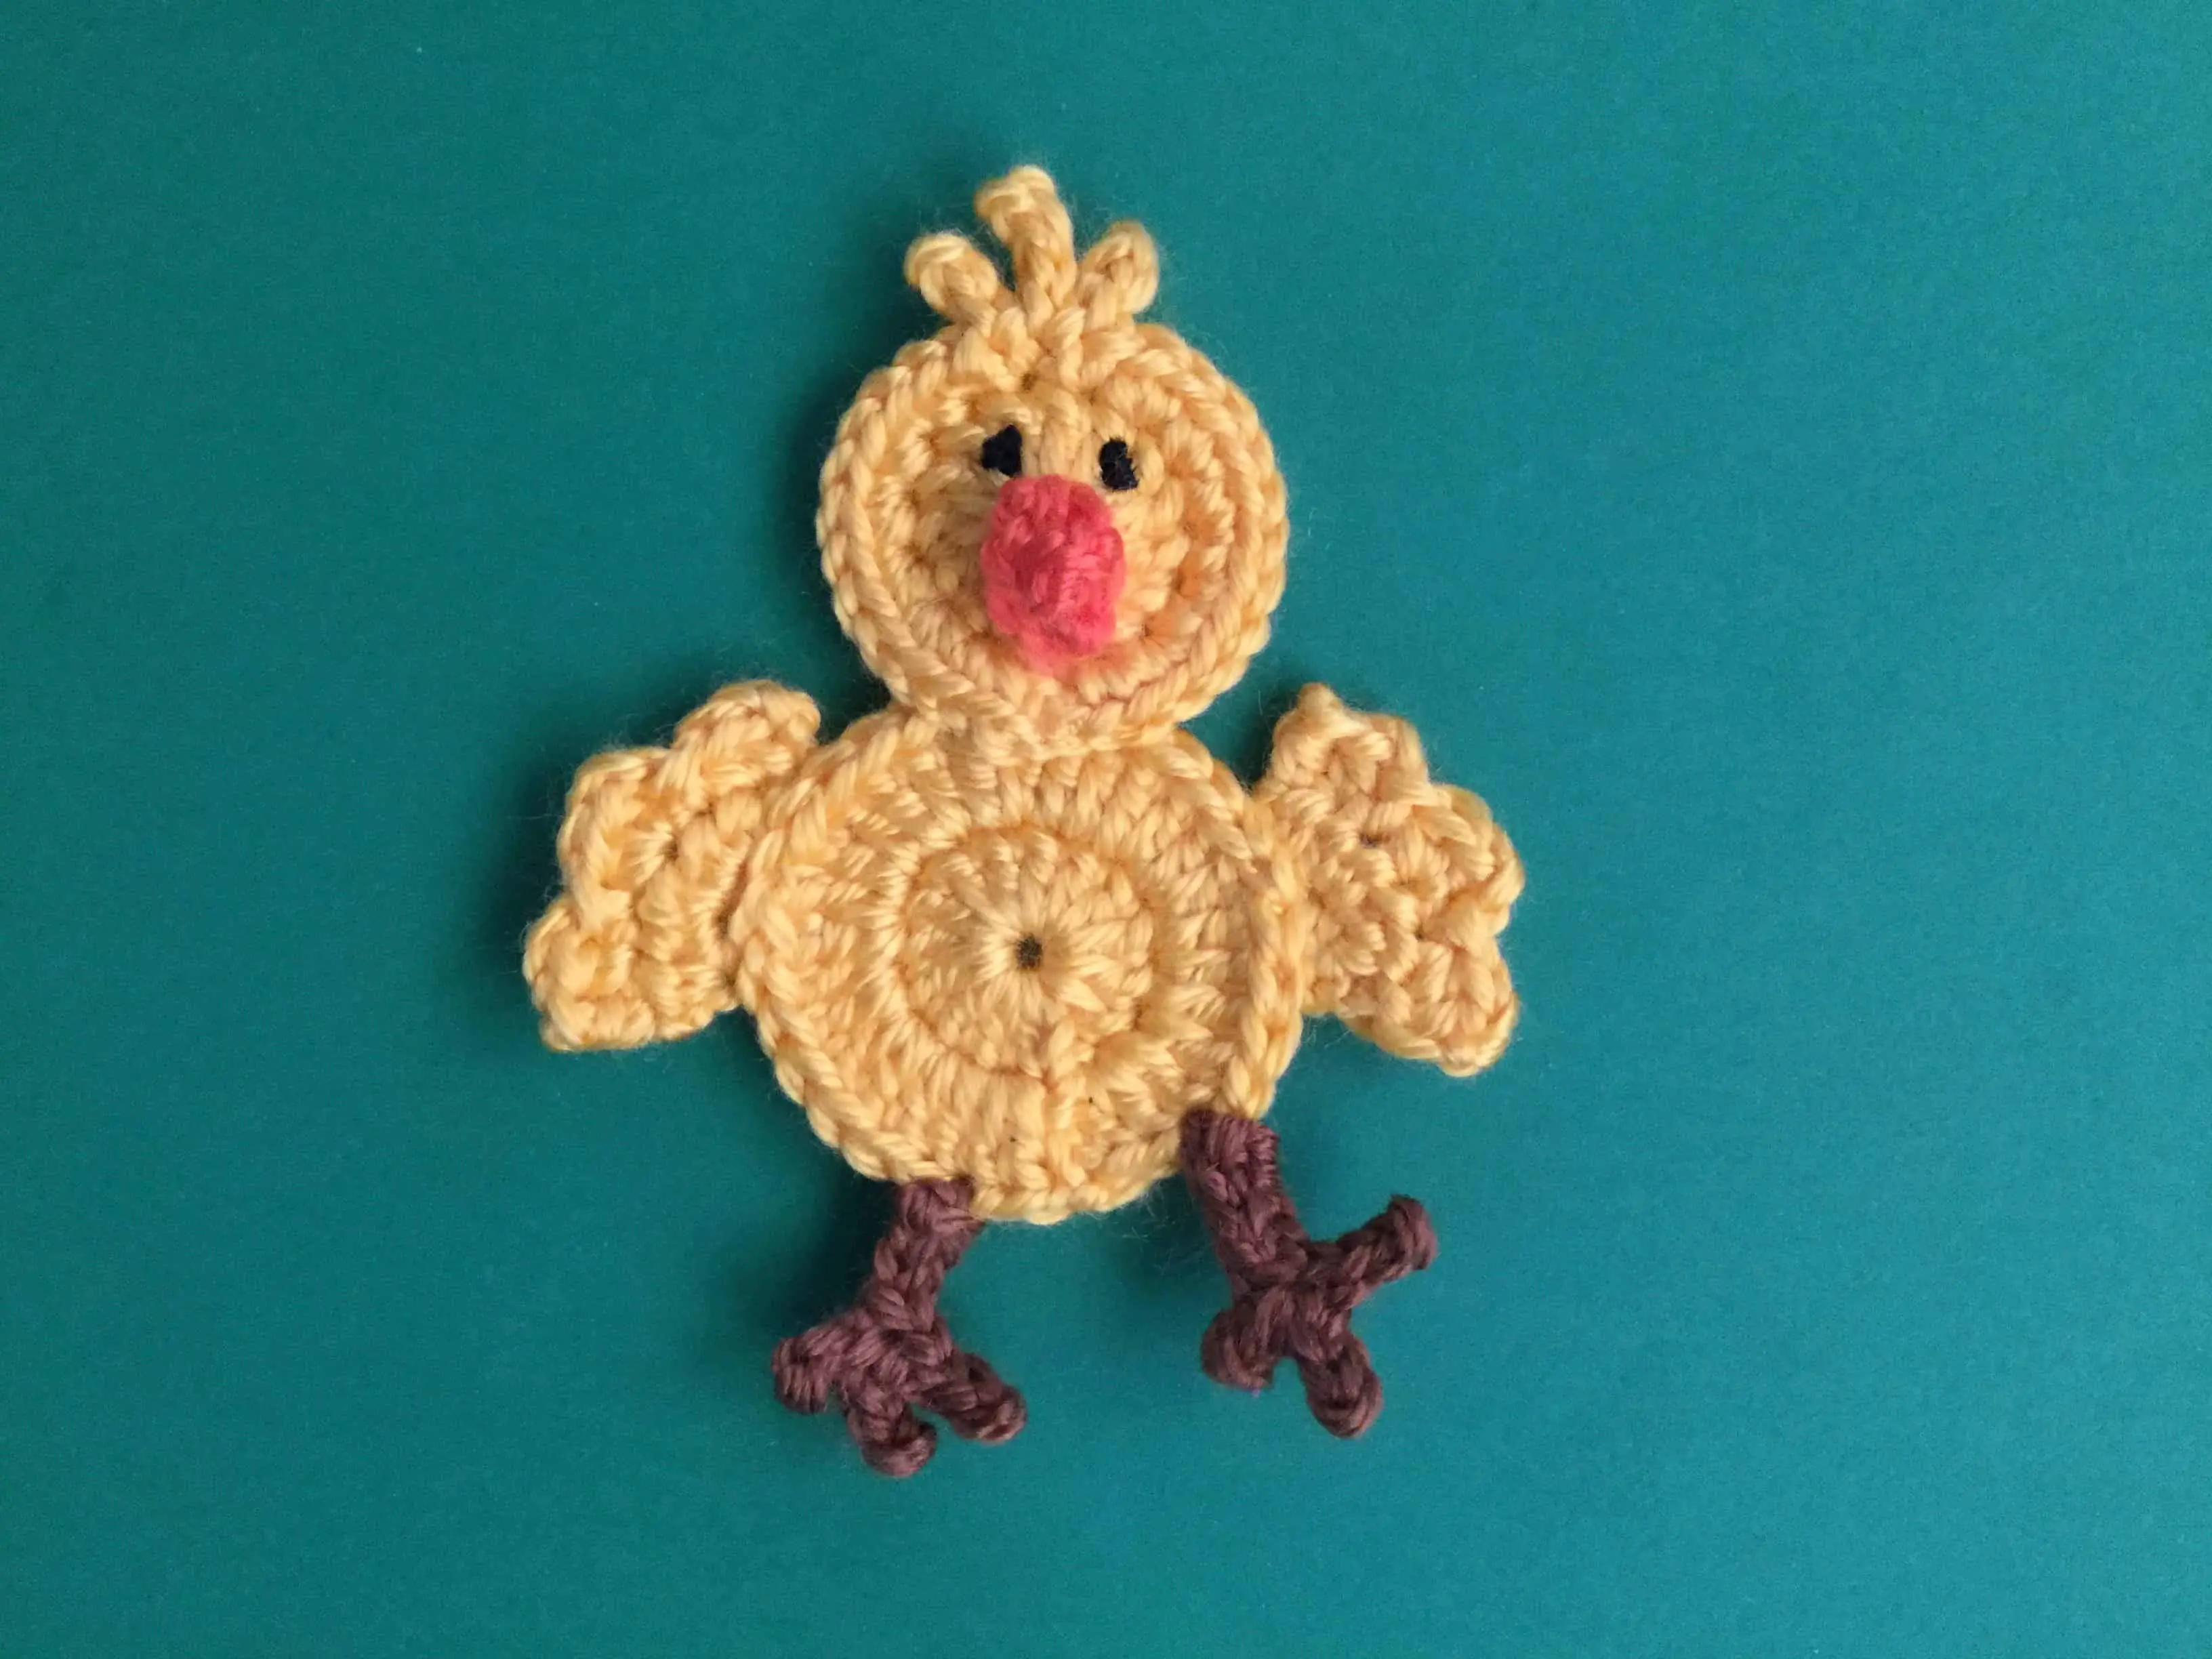 Finished crochet chicken landscape